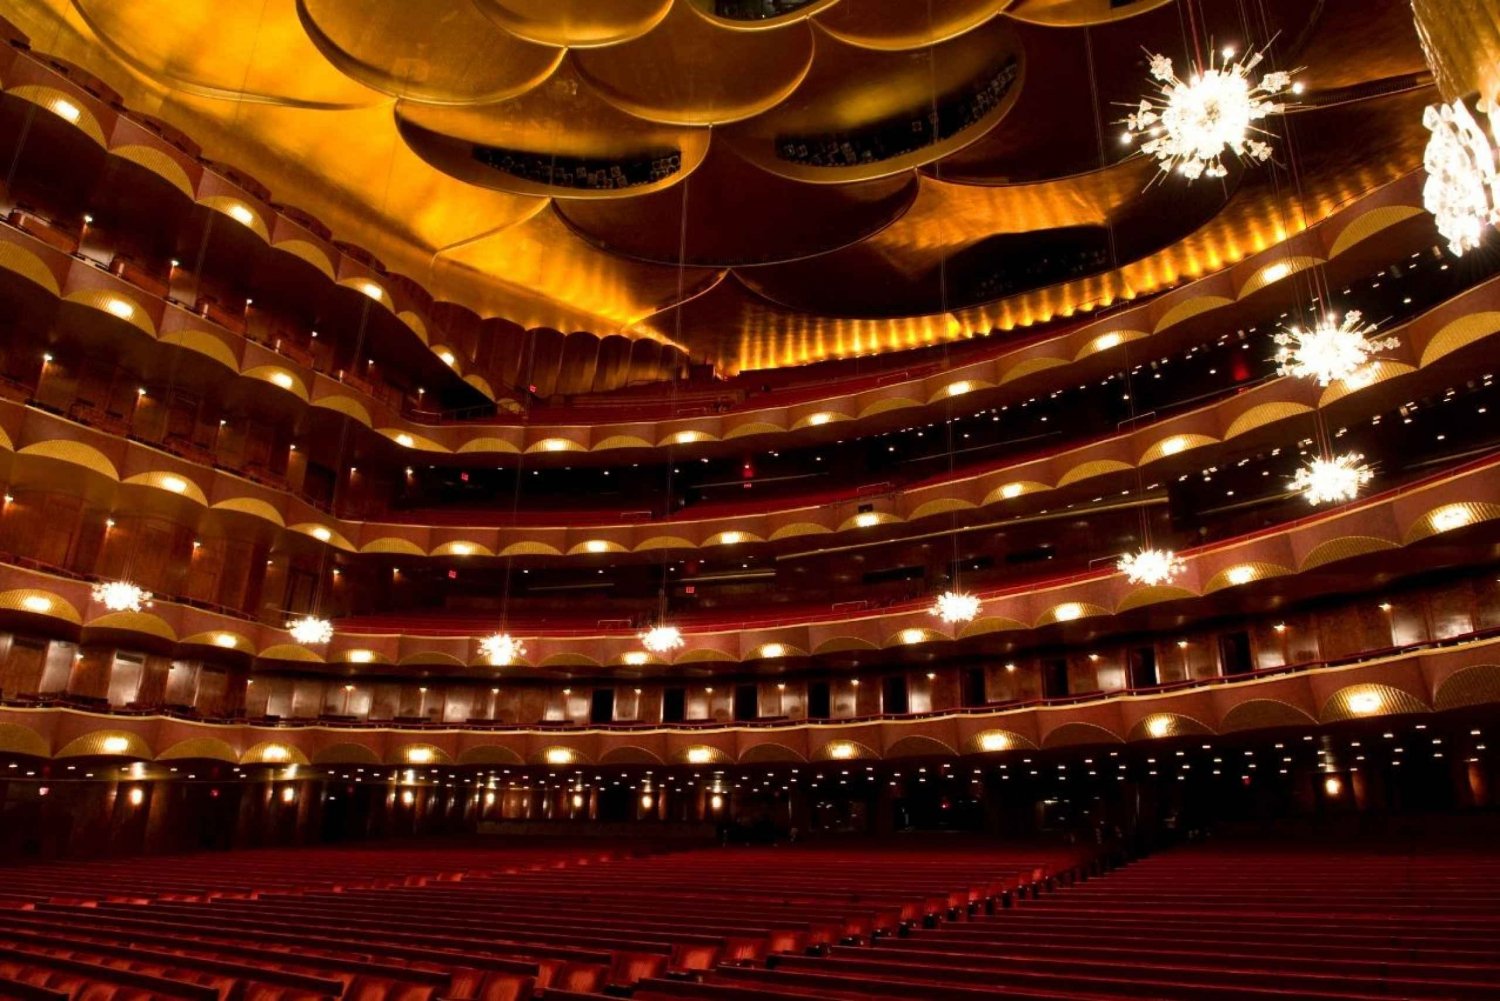 NYC: The Metropolitan Opera Tickets